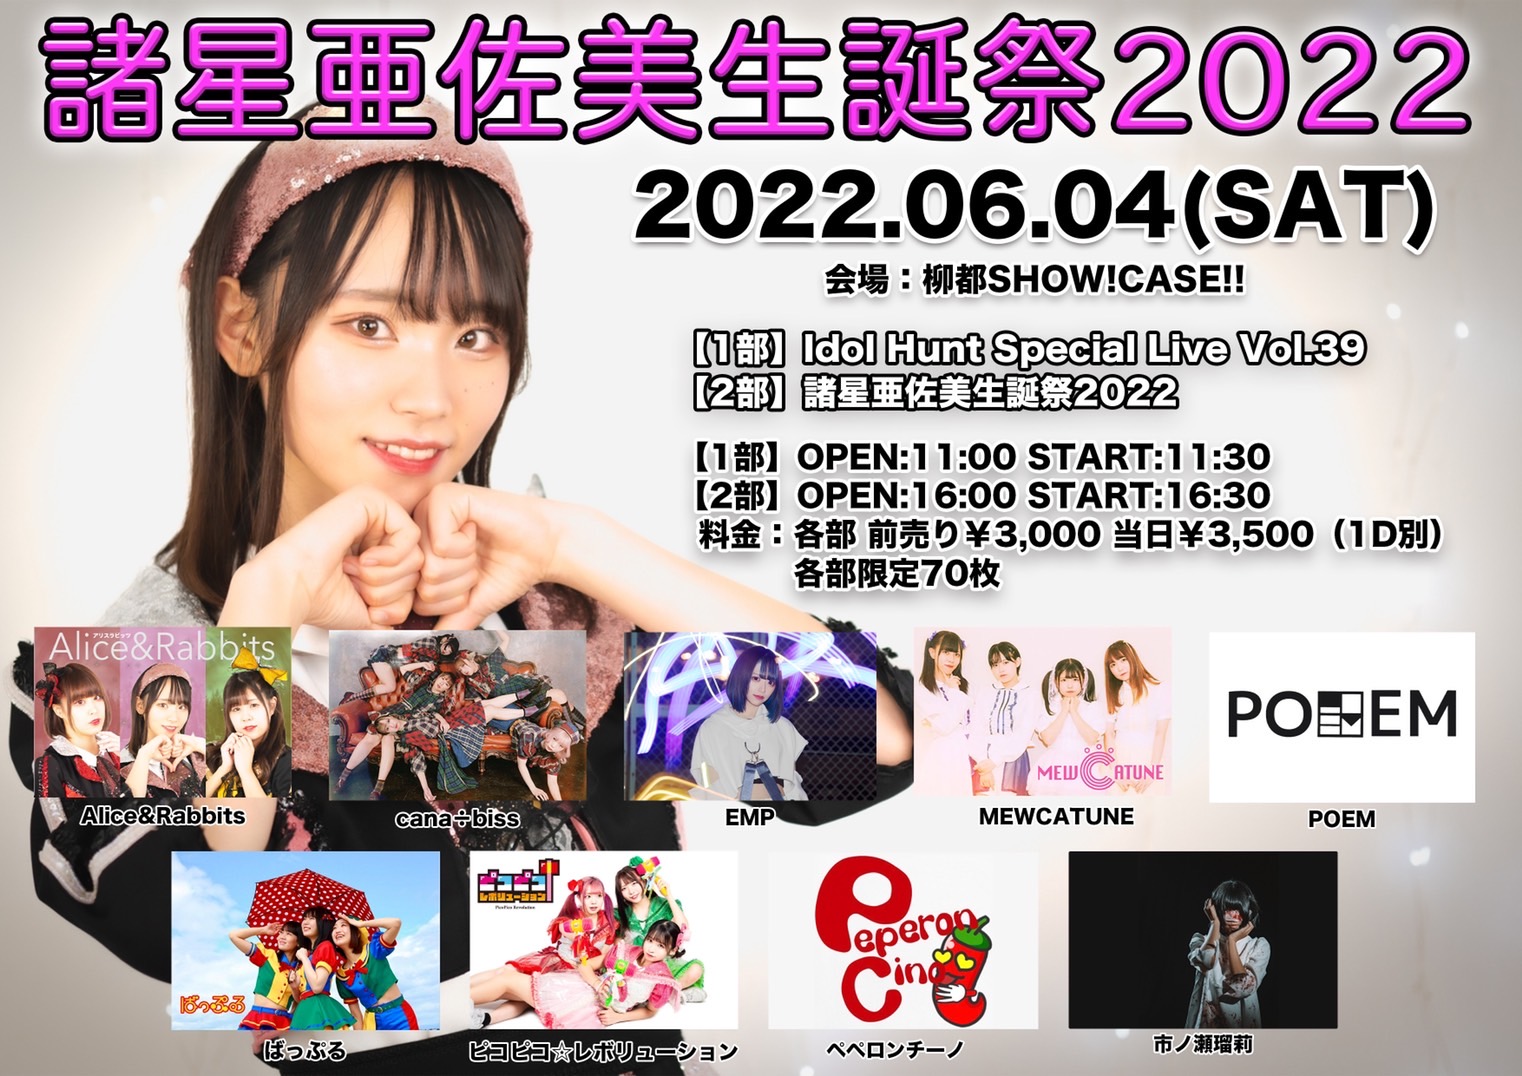 Idol Hunt Special Live Vol.39 / 諸星亜佐美生誕祭2022 @ 柳都SHOW!CASE!!